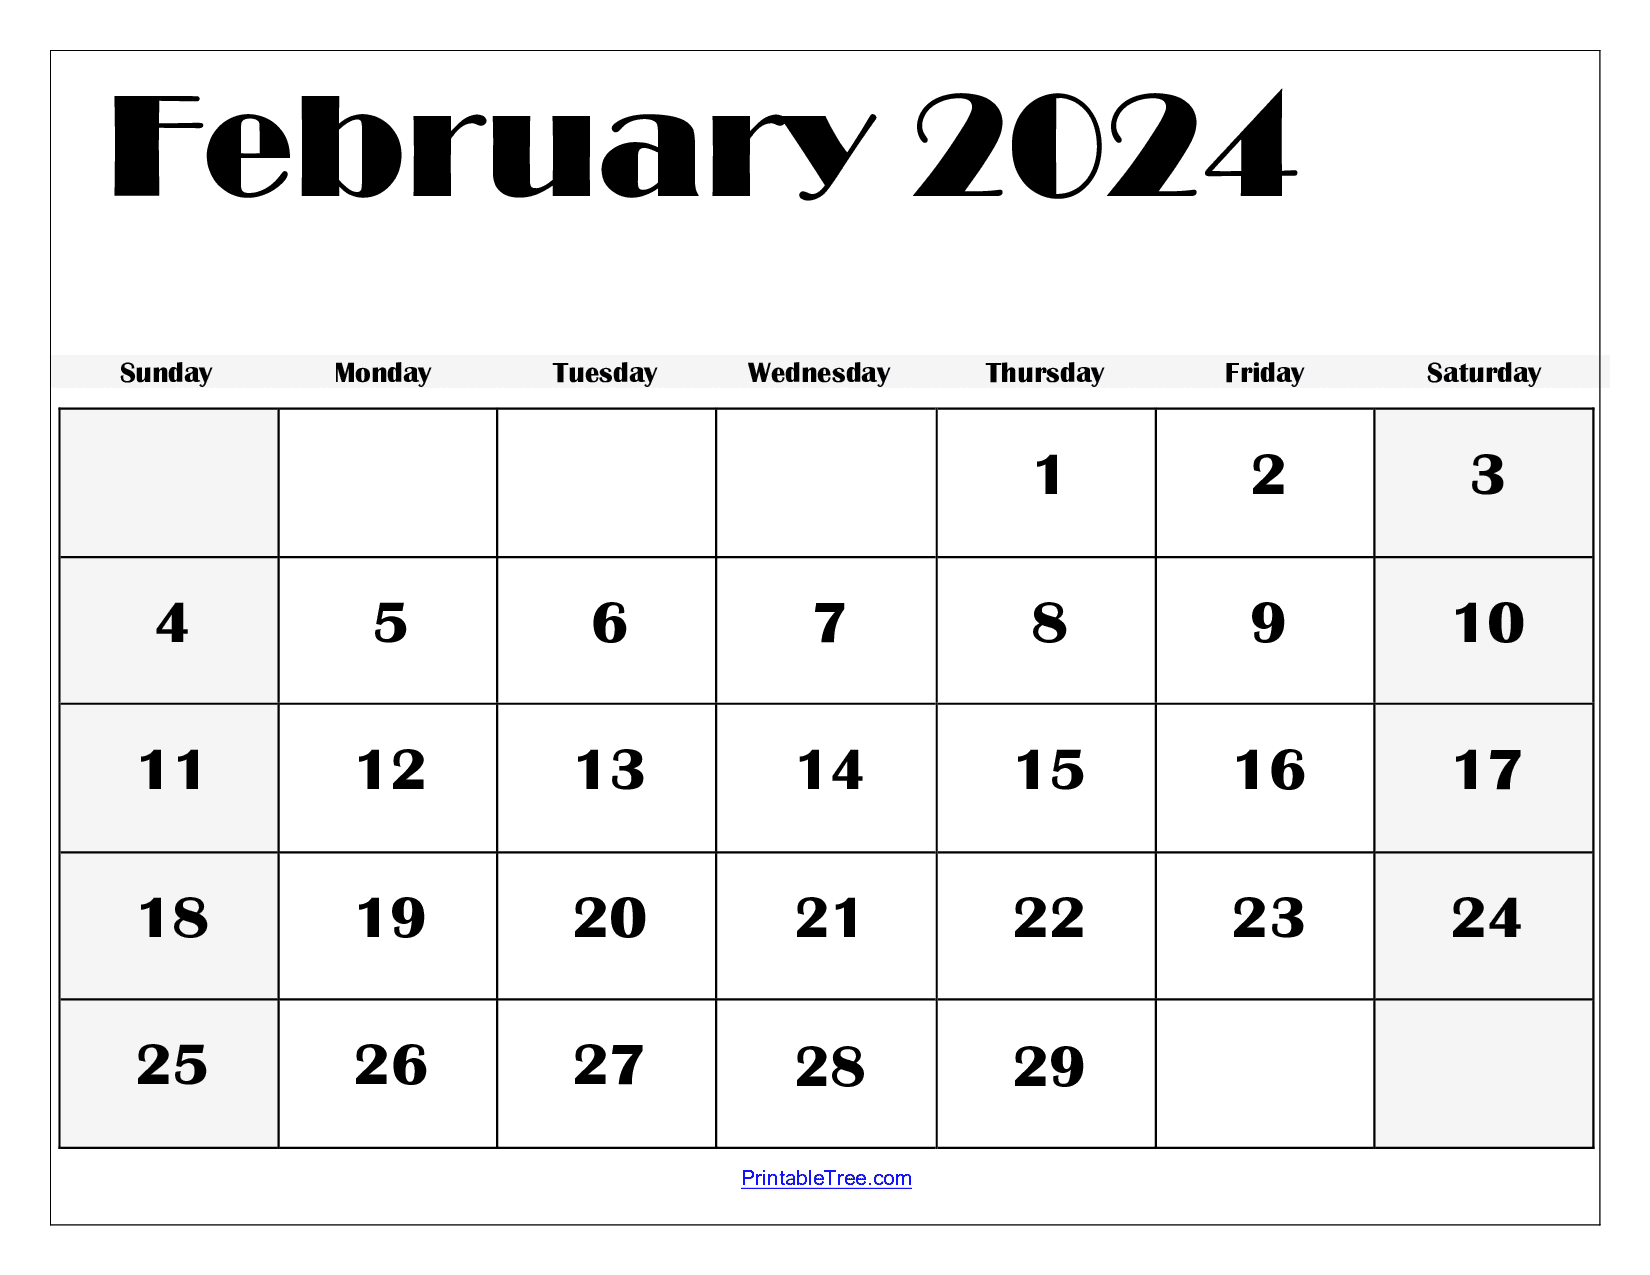 February 2024 Calendar Printable Pdf Template With Holidays for Feburary 2024 Printable Calendar